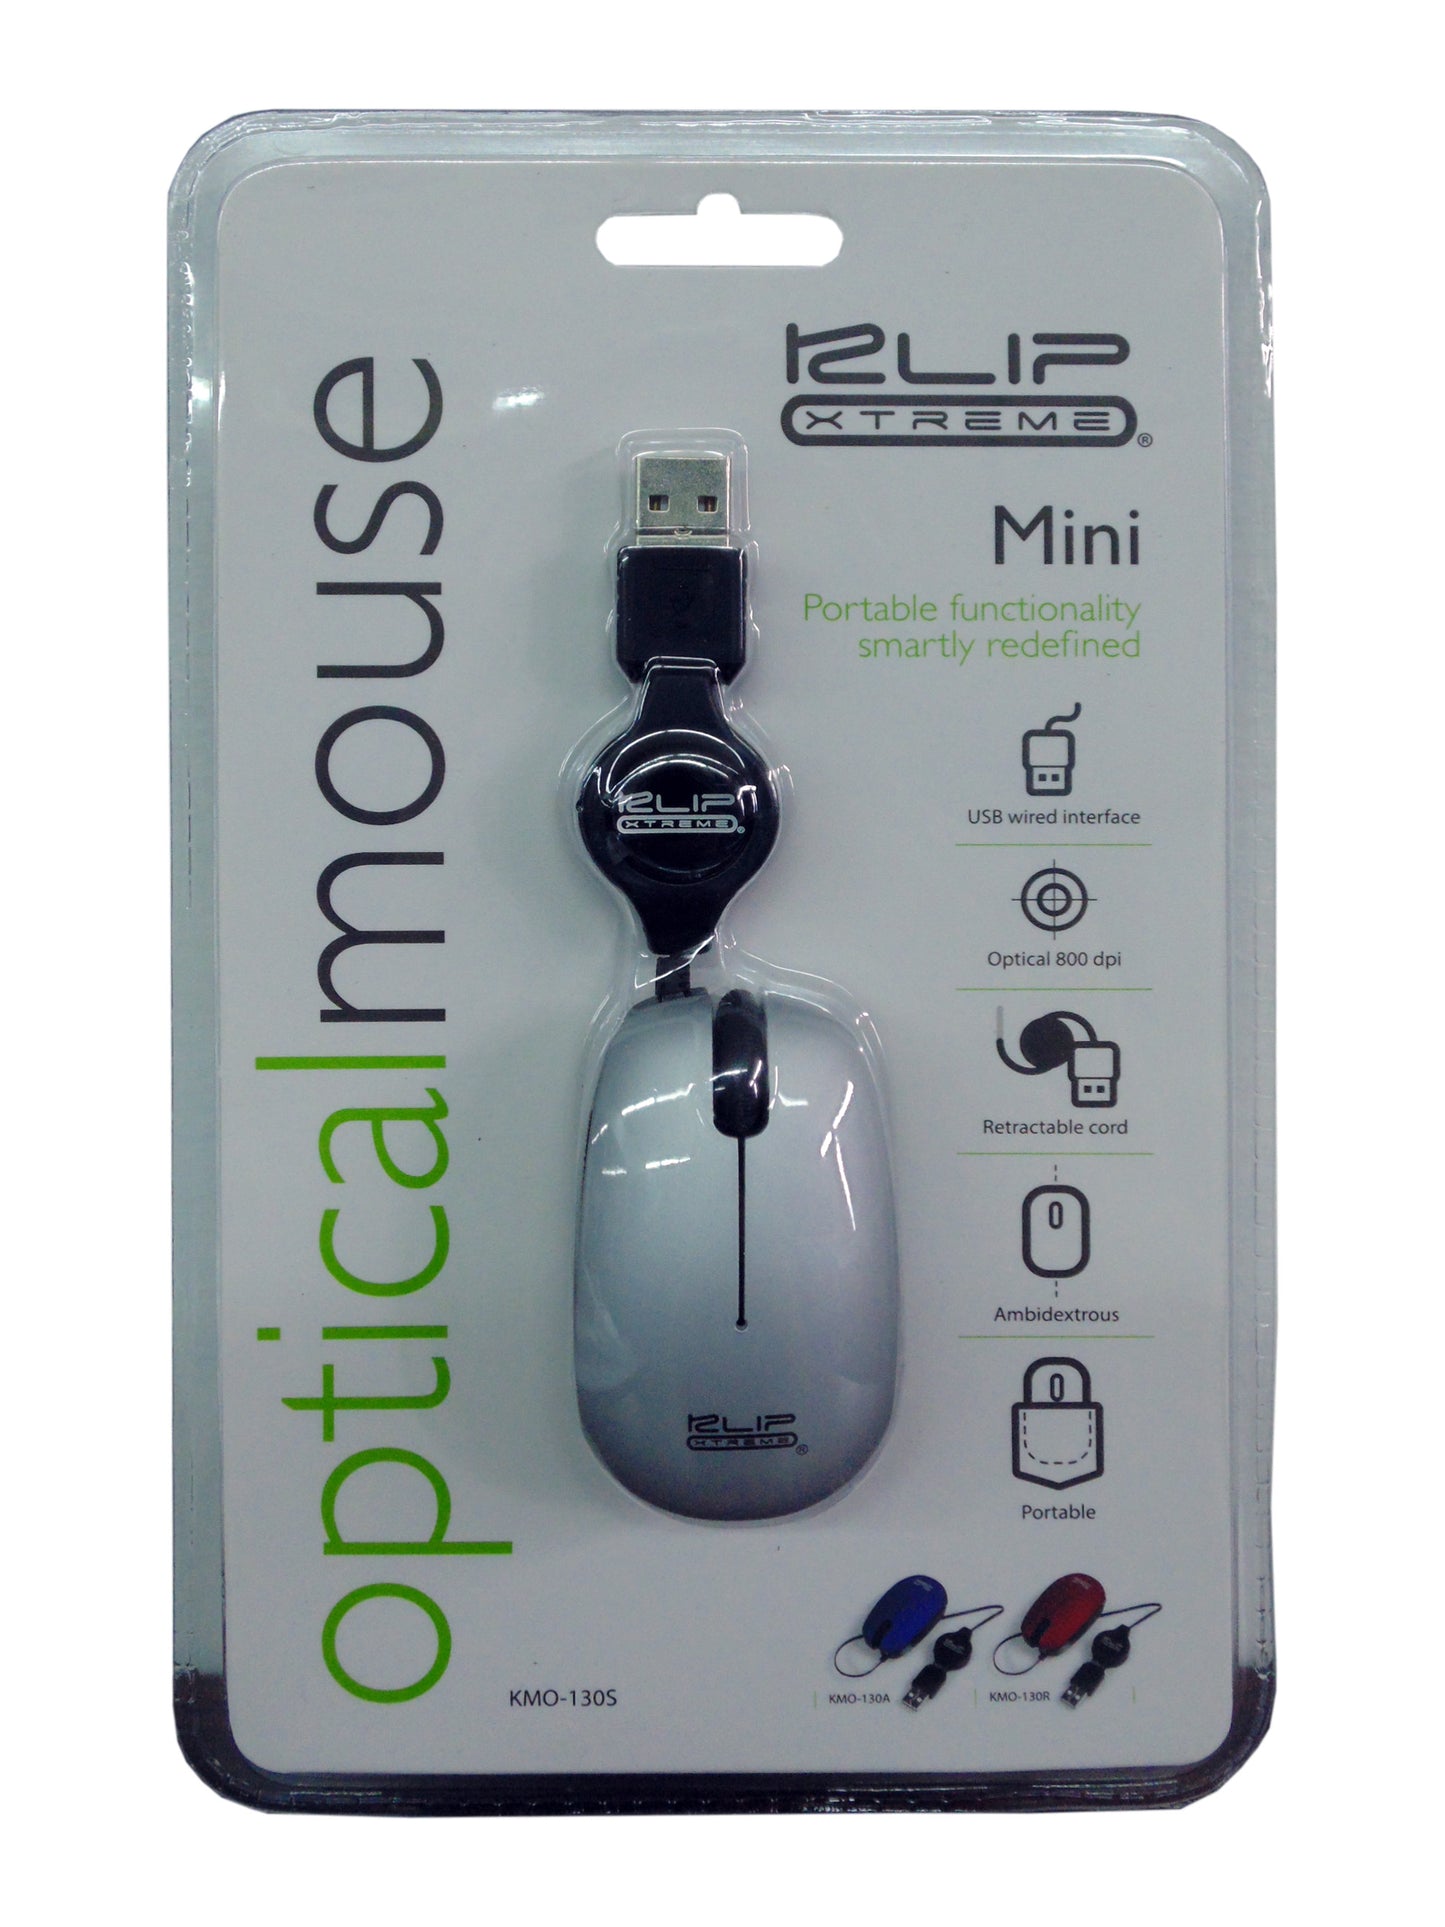 Mini mouse USB 800 DPI con cable retráctil